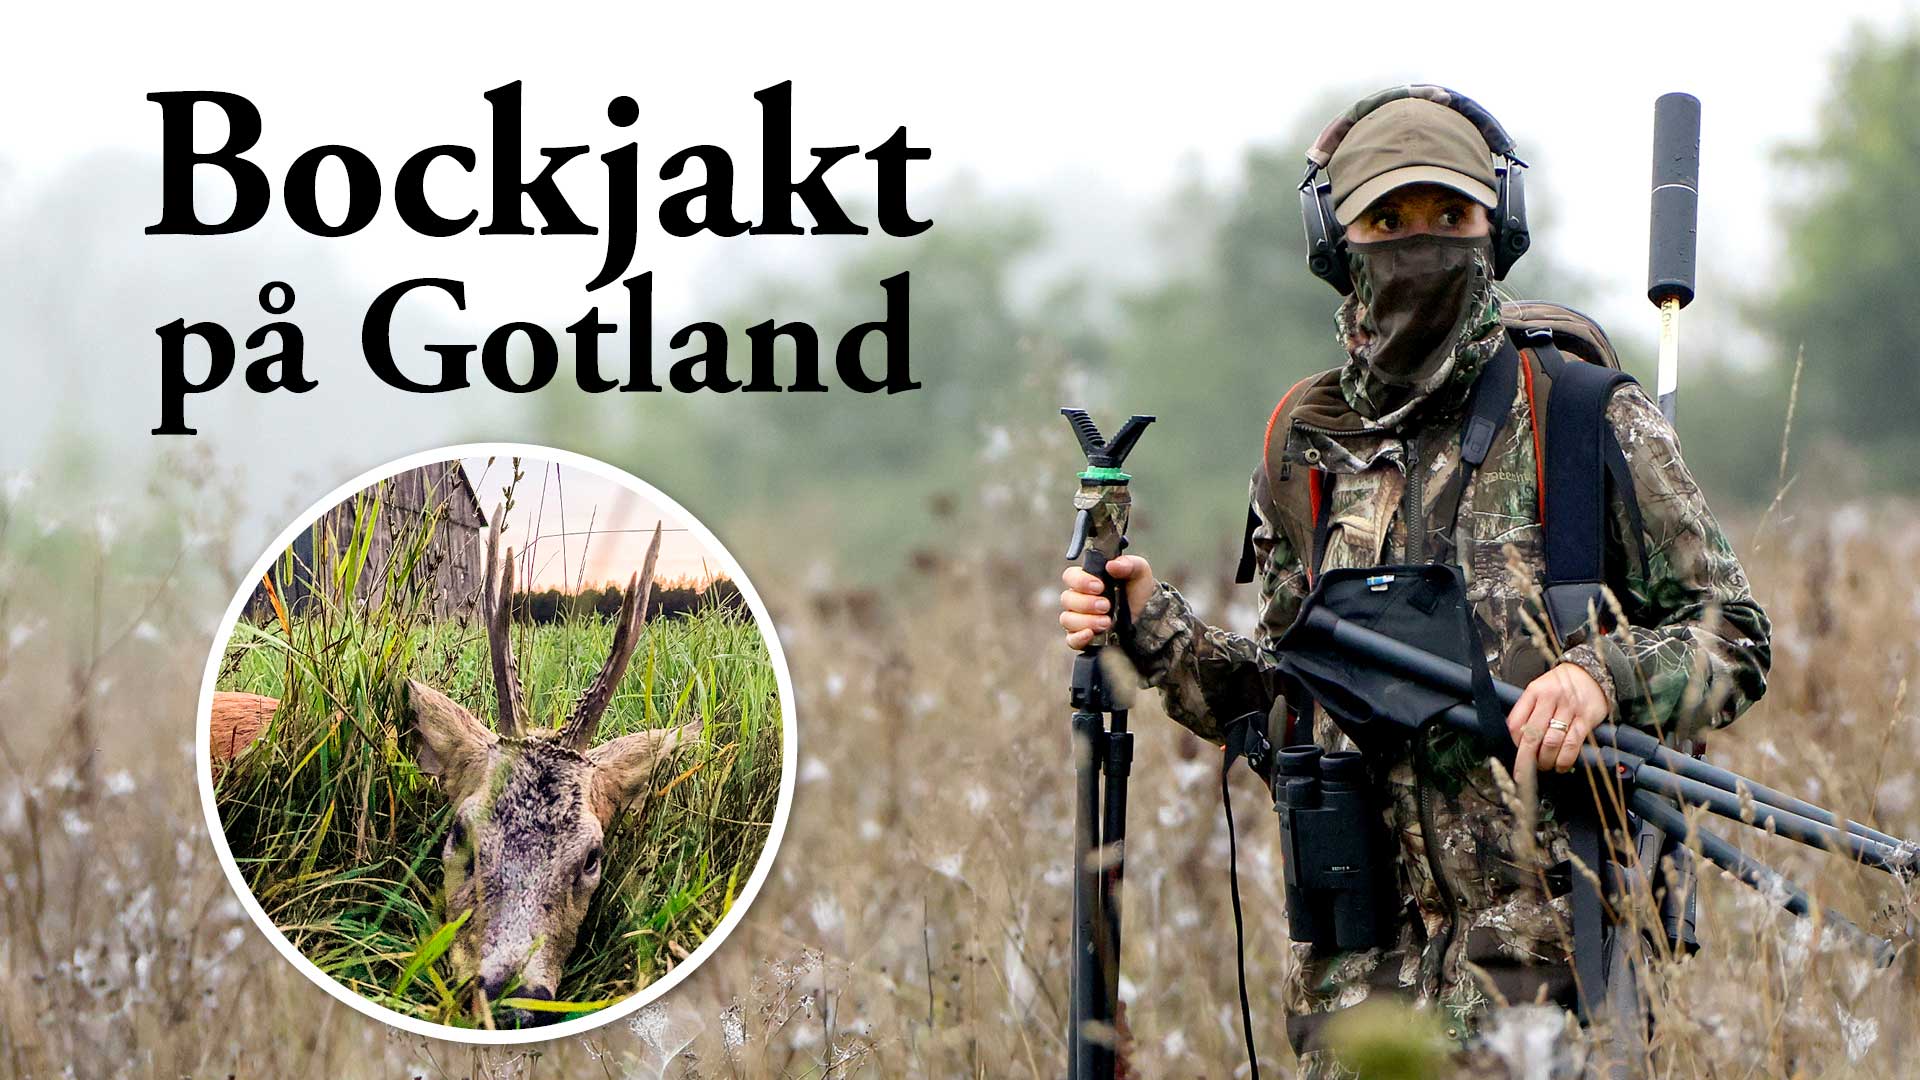 Bockjakt på Gotland